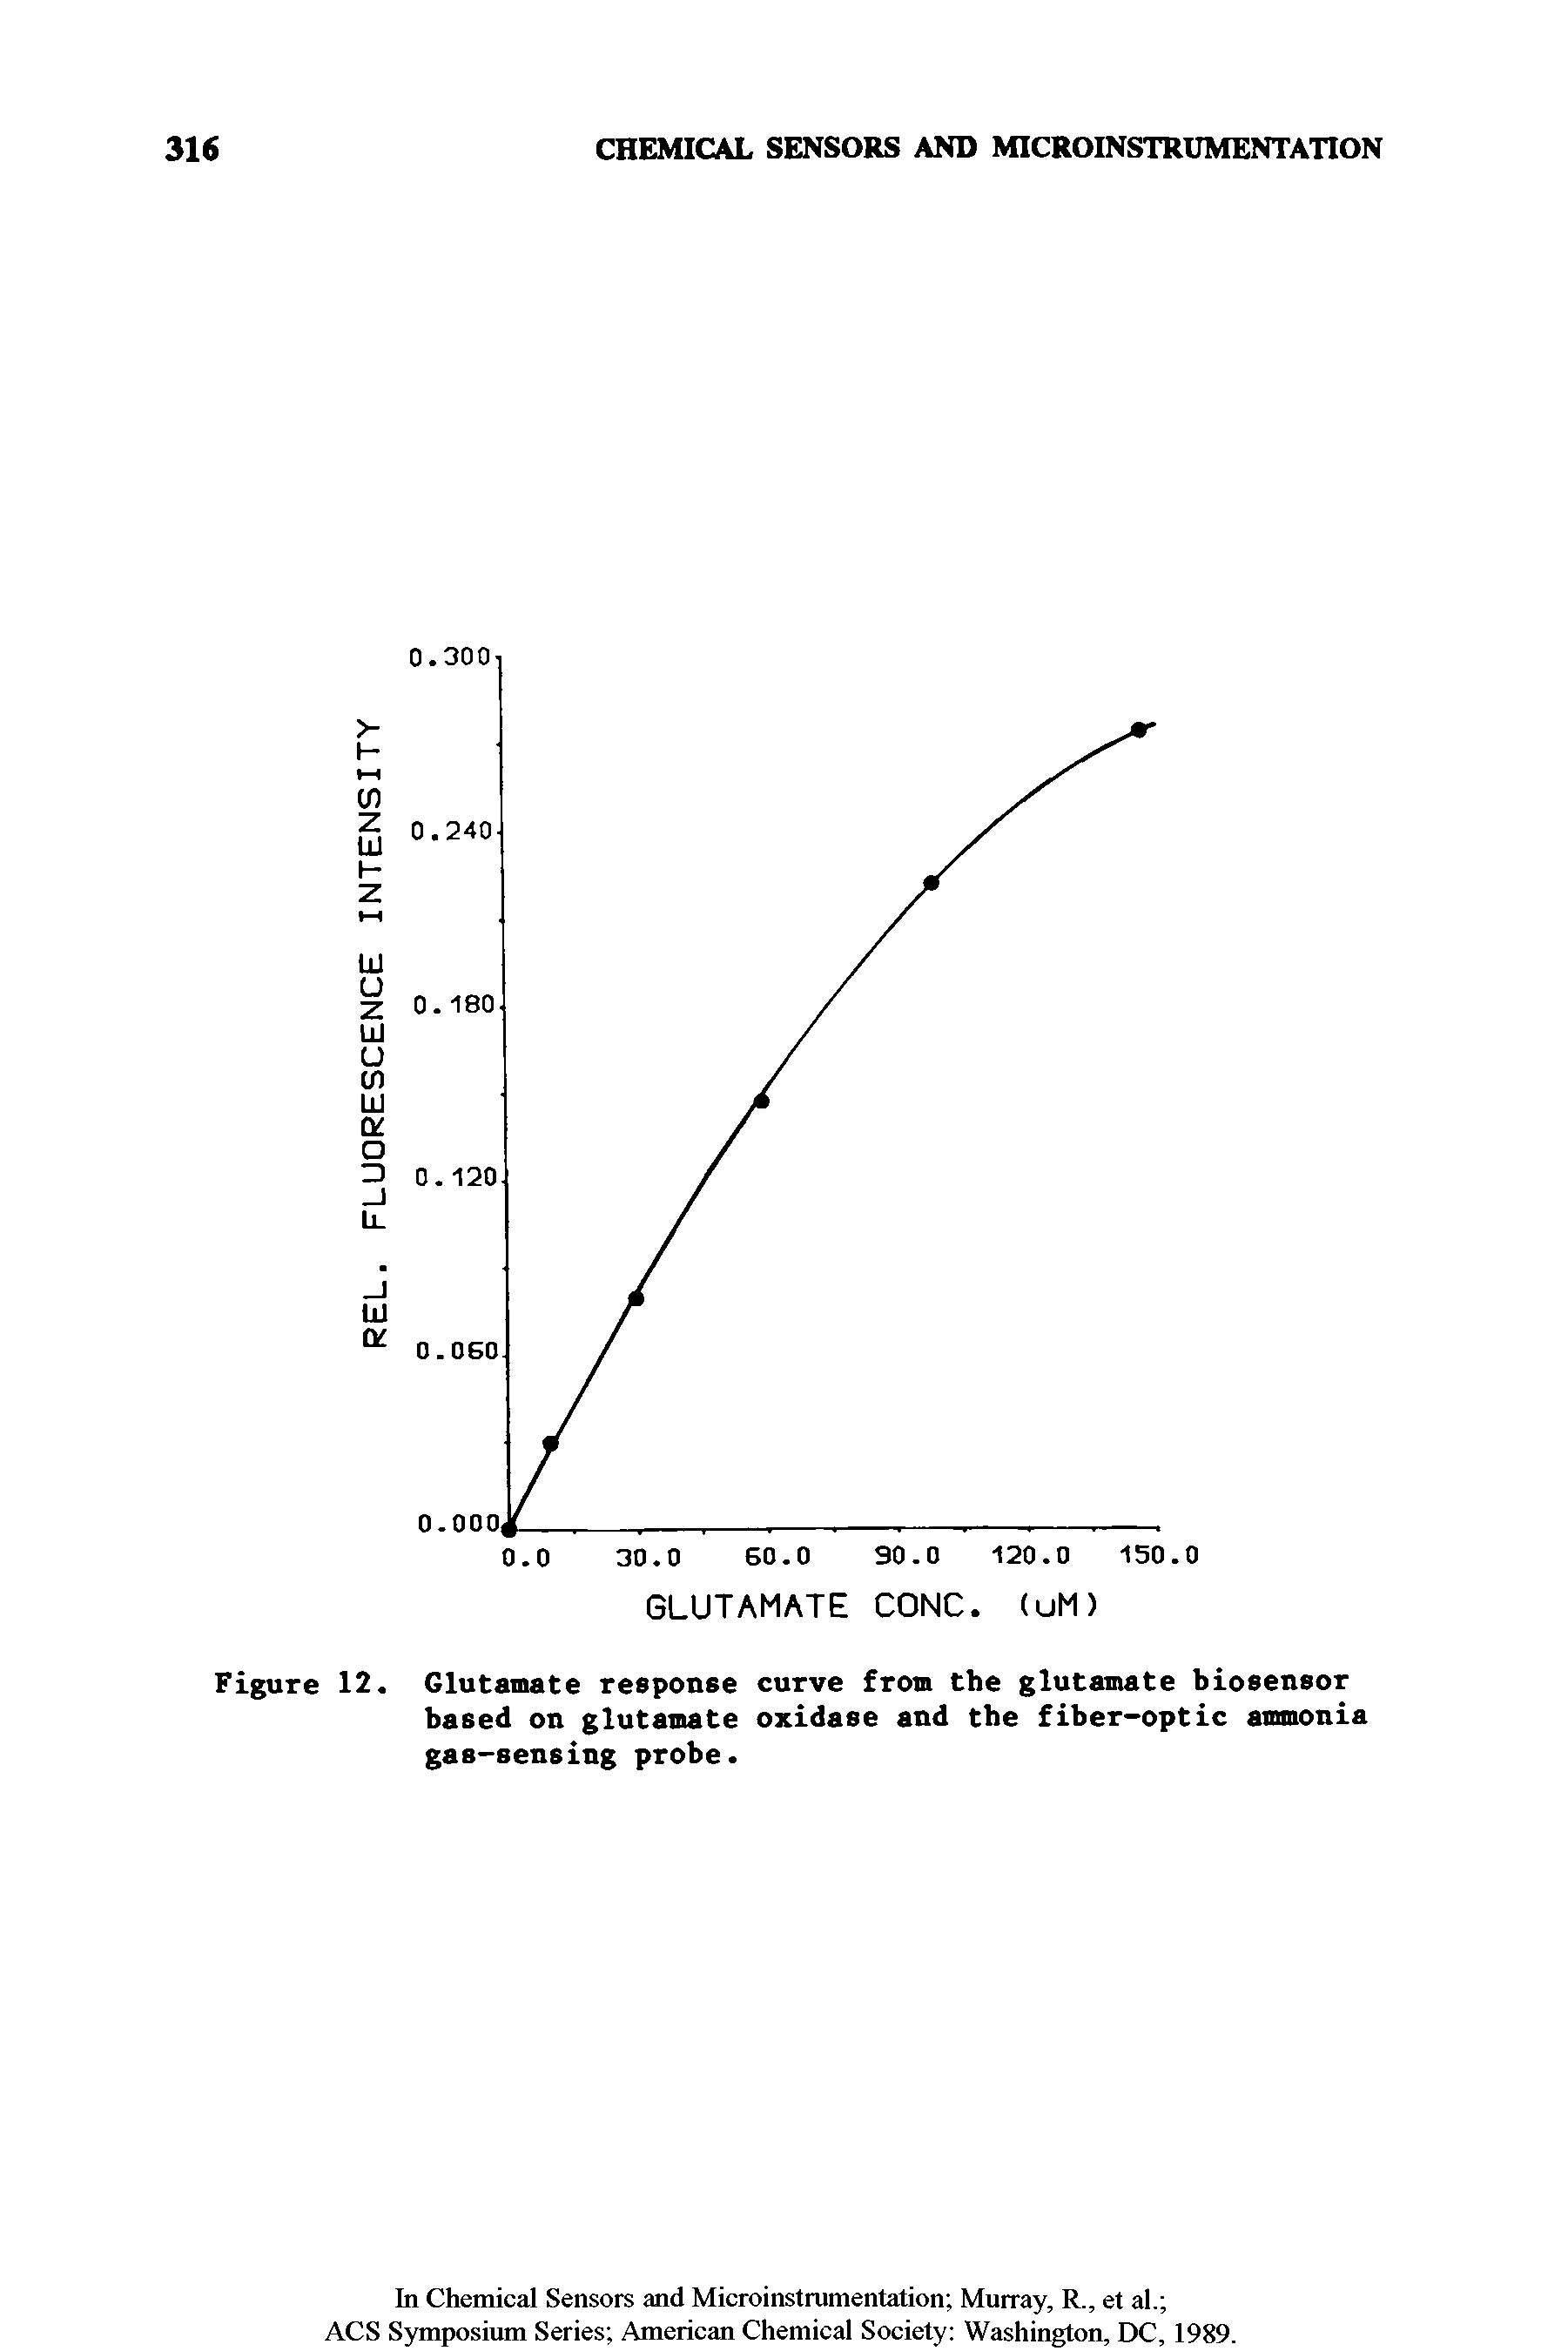 Figure 12. Glutamate response curve from the glutastate biosensor based on glutamate oxidase and the fiber-optic ammonia gas-sensing probe.